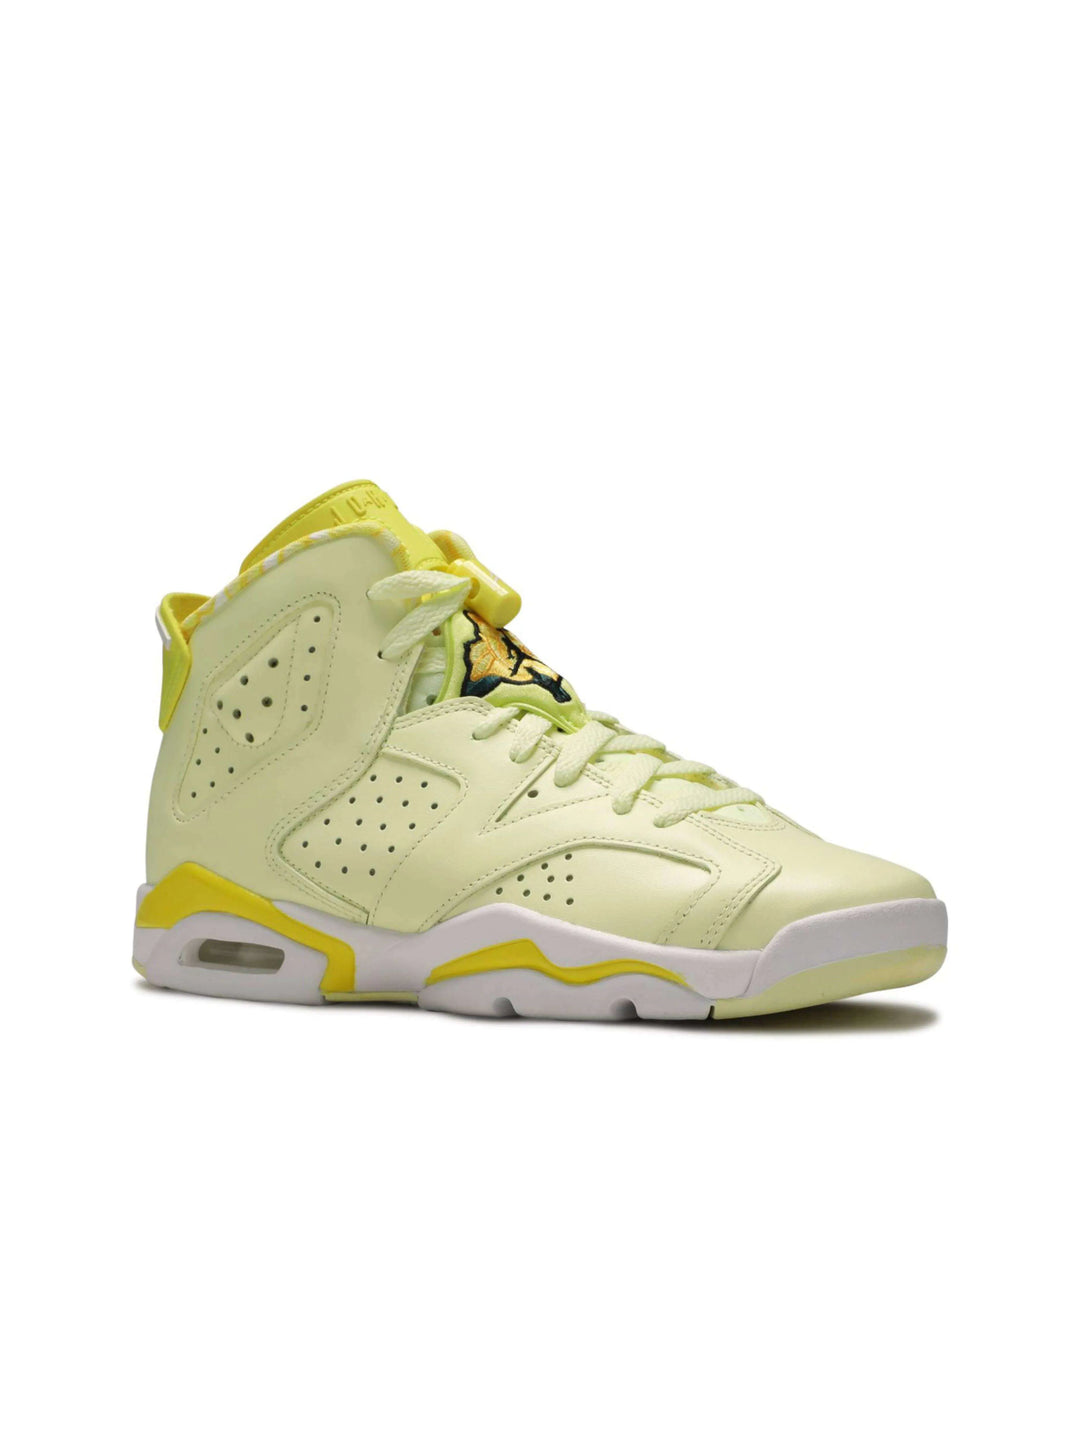 Nike Air Jordan 6 Retro Dynamic Yellow Floral (GS) Jordan Brand